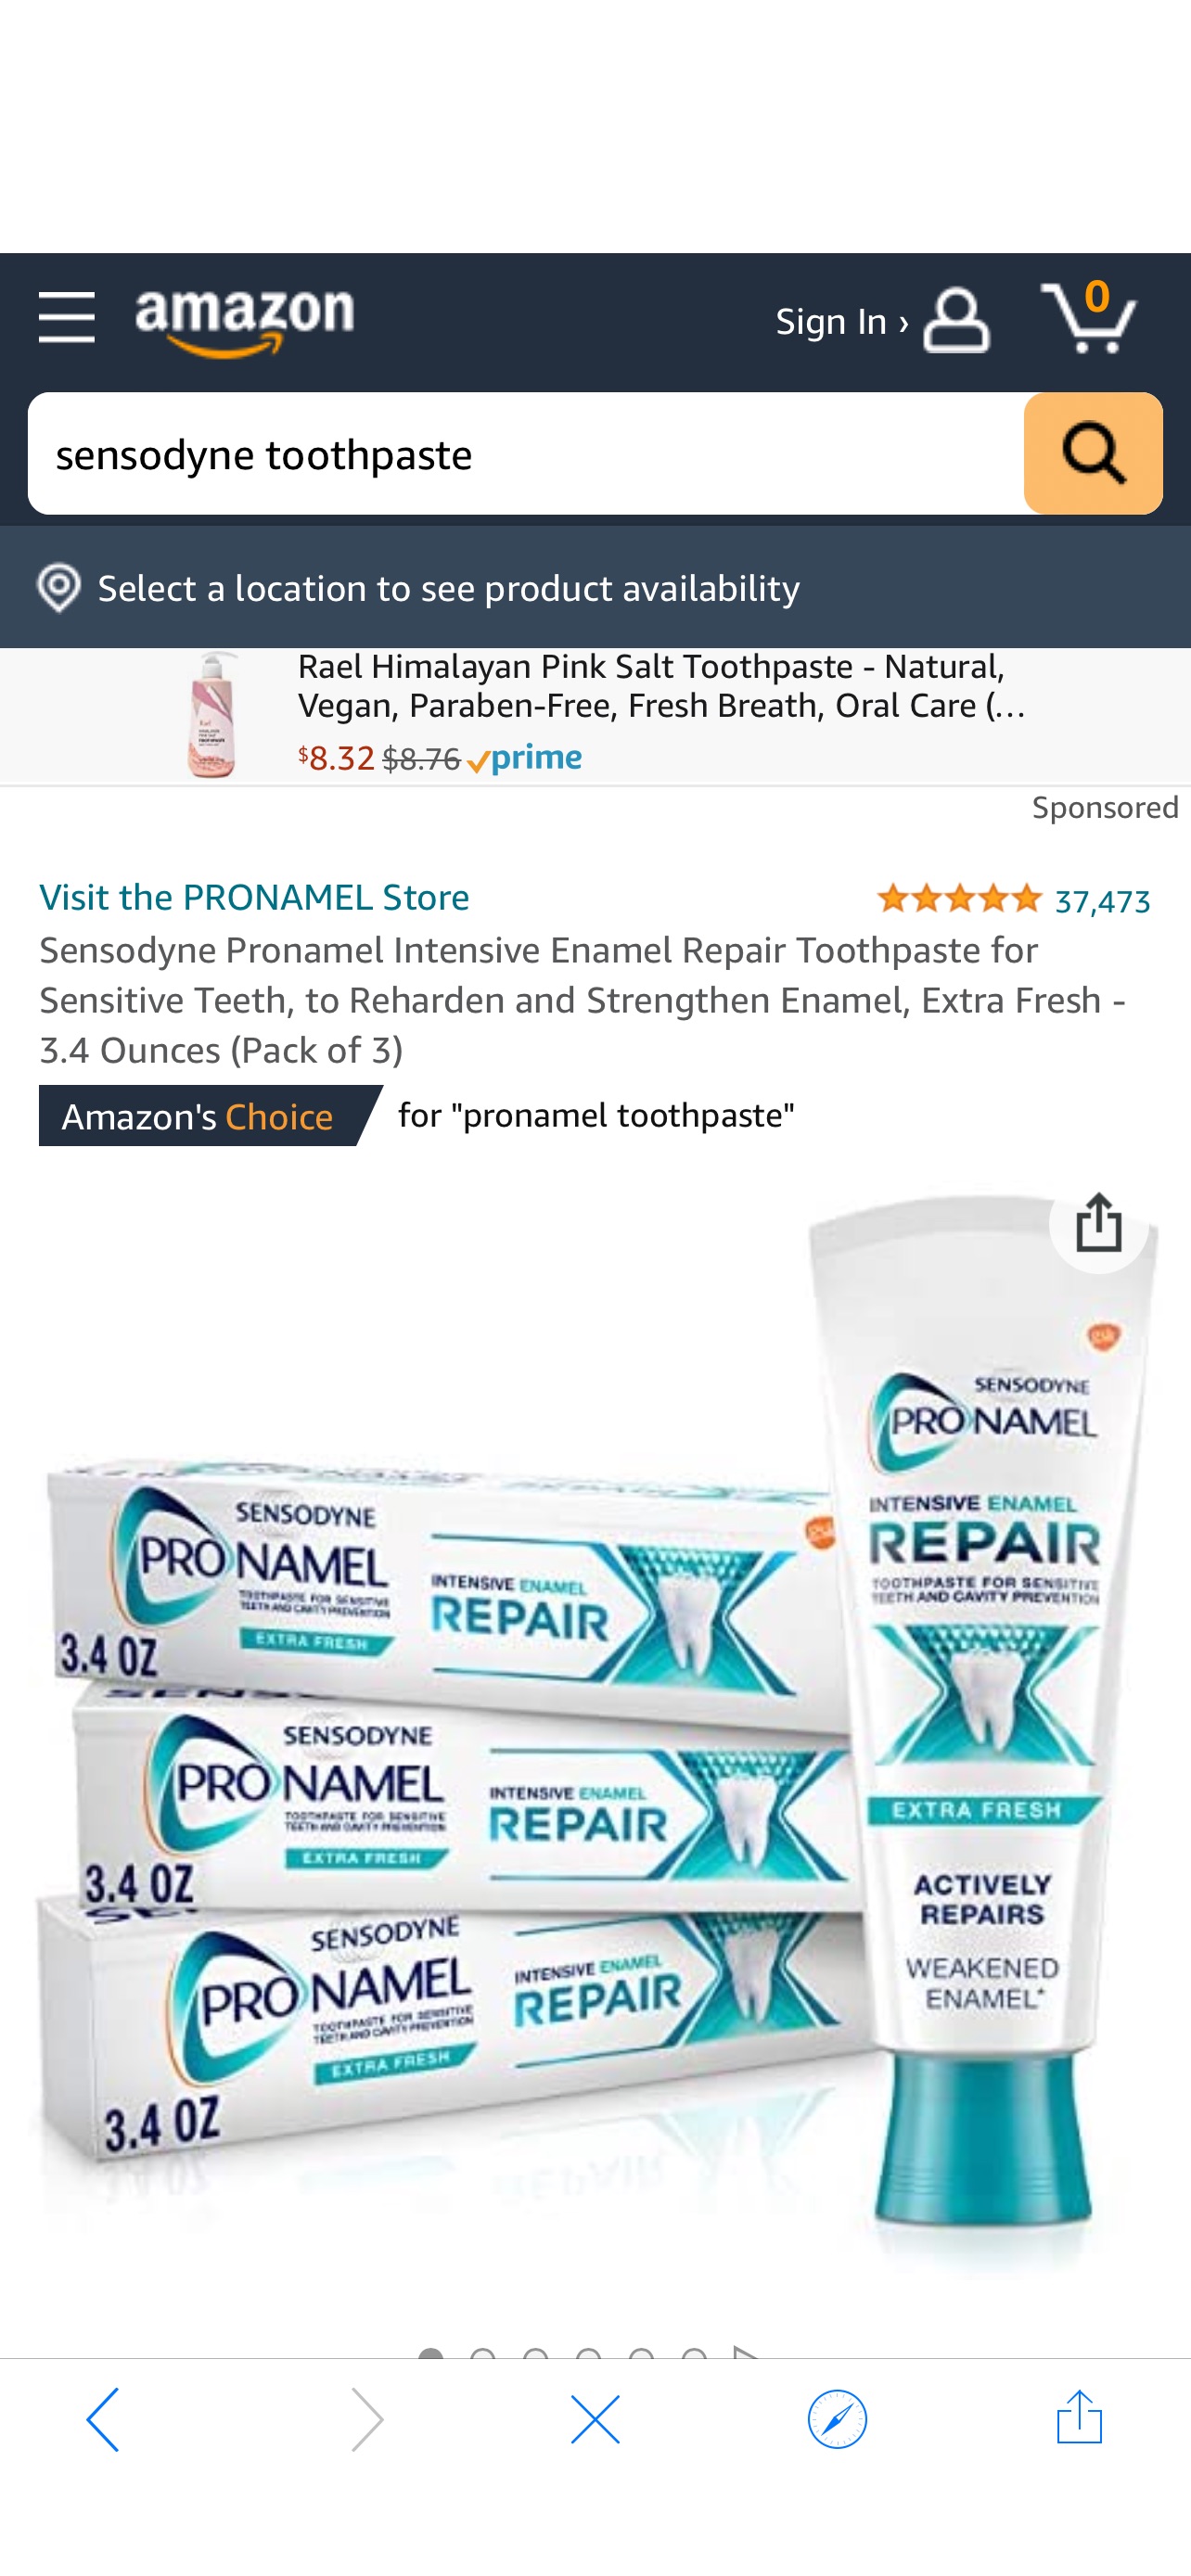 Amazon.com: Sensodyne Pronamel Intensive Enamel Repair Toothpaste for Sensitive Teeth, to Reharden and Strengthen Enamel, Extra Fresh - 3.4 Ounces (Pack of 3)